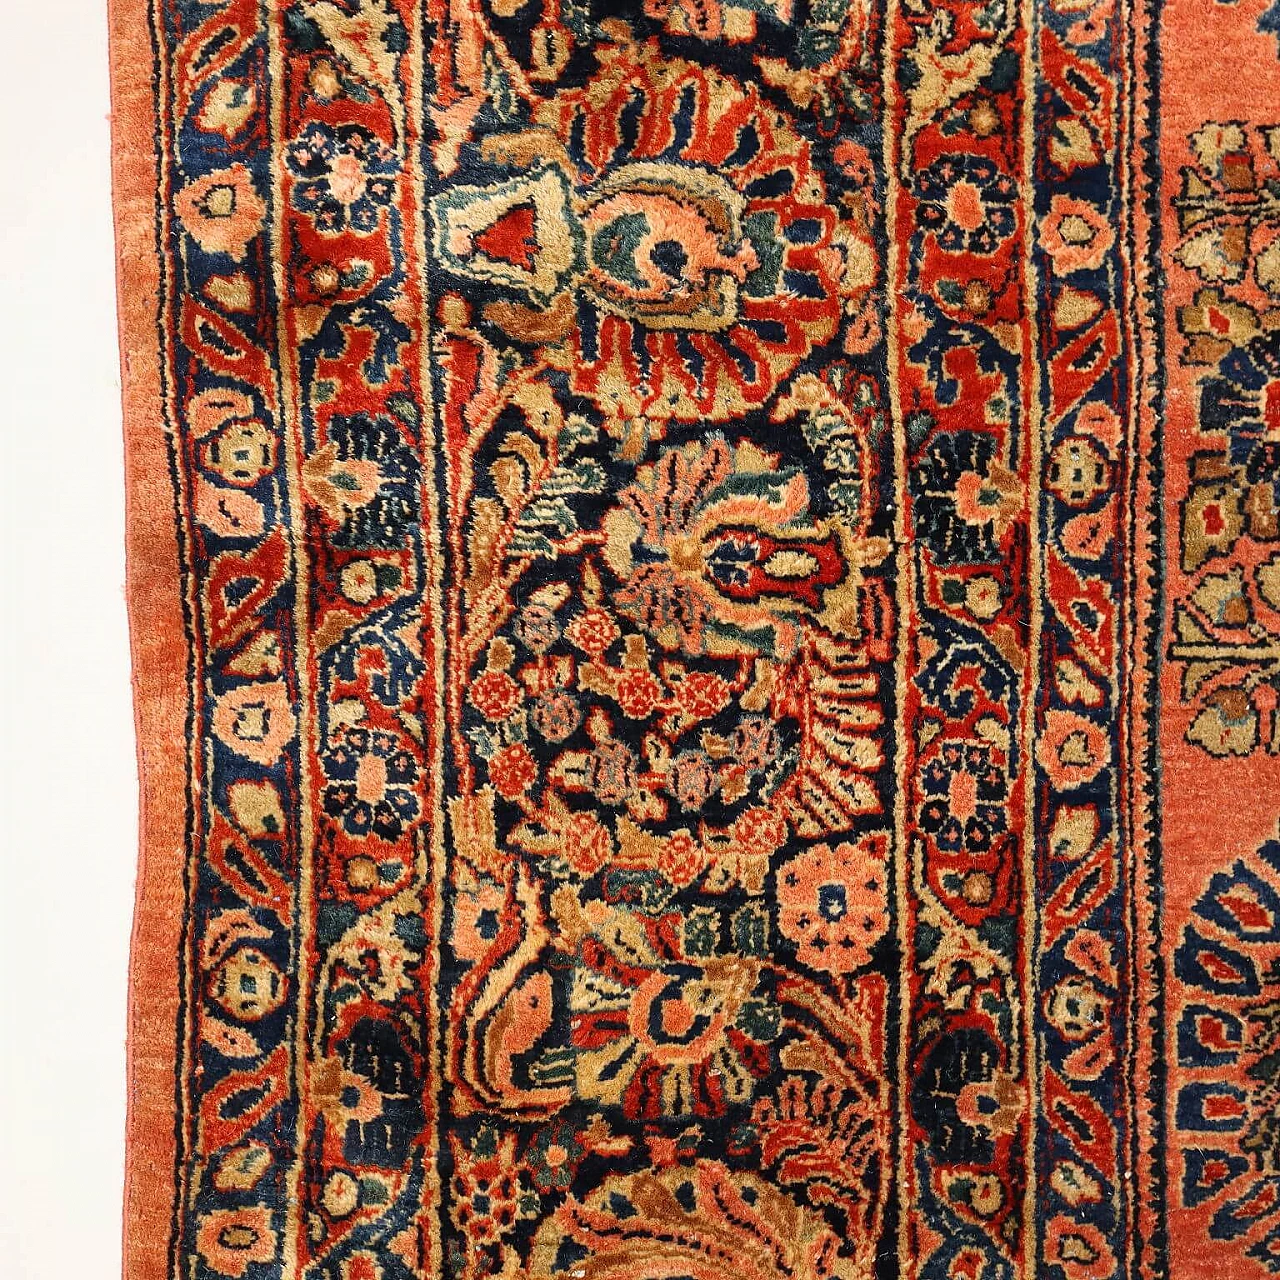 Iranian Saruk American cotton and wool carpet 6